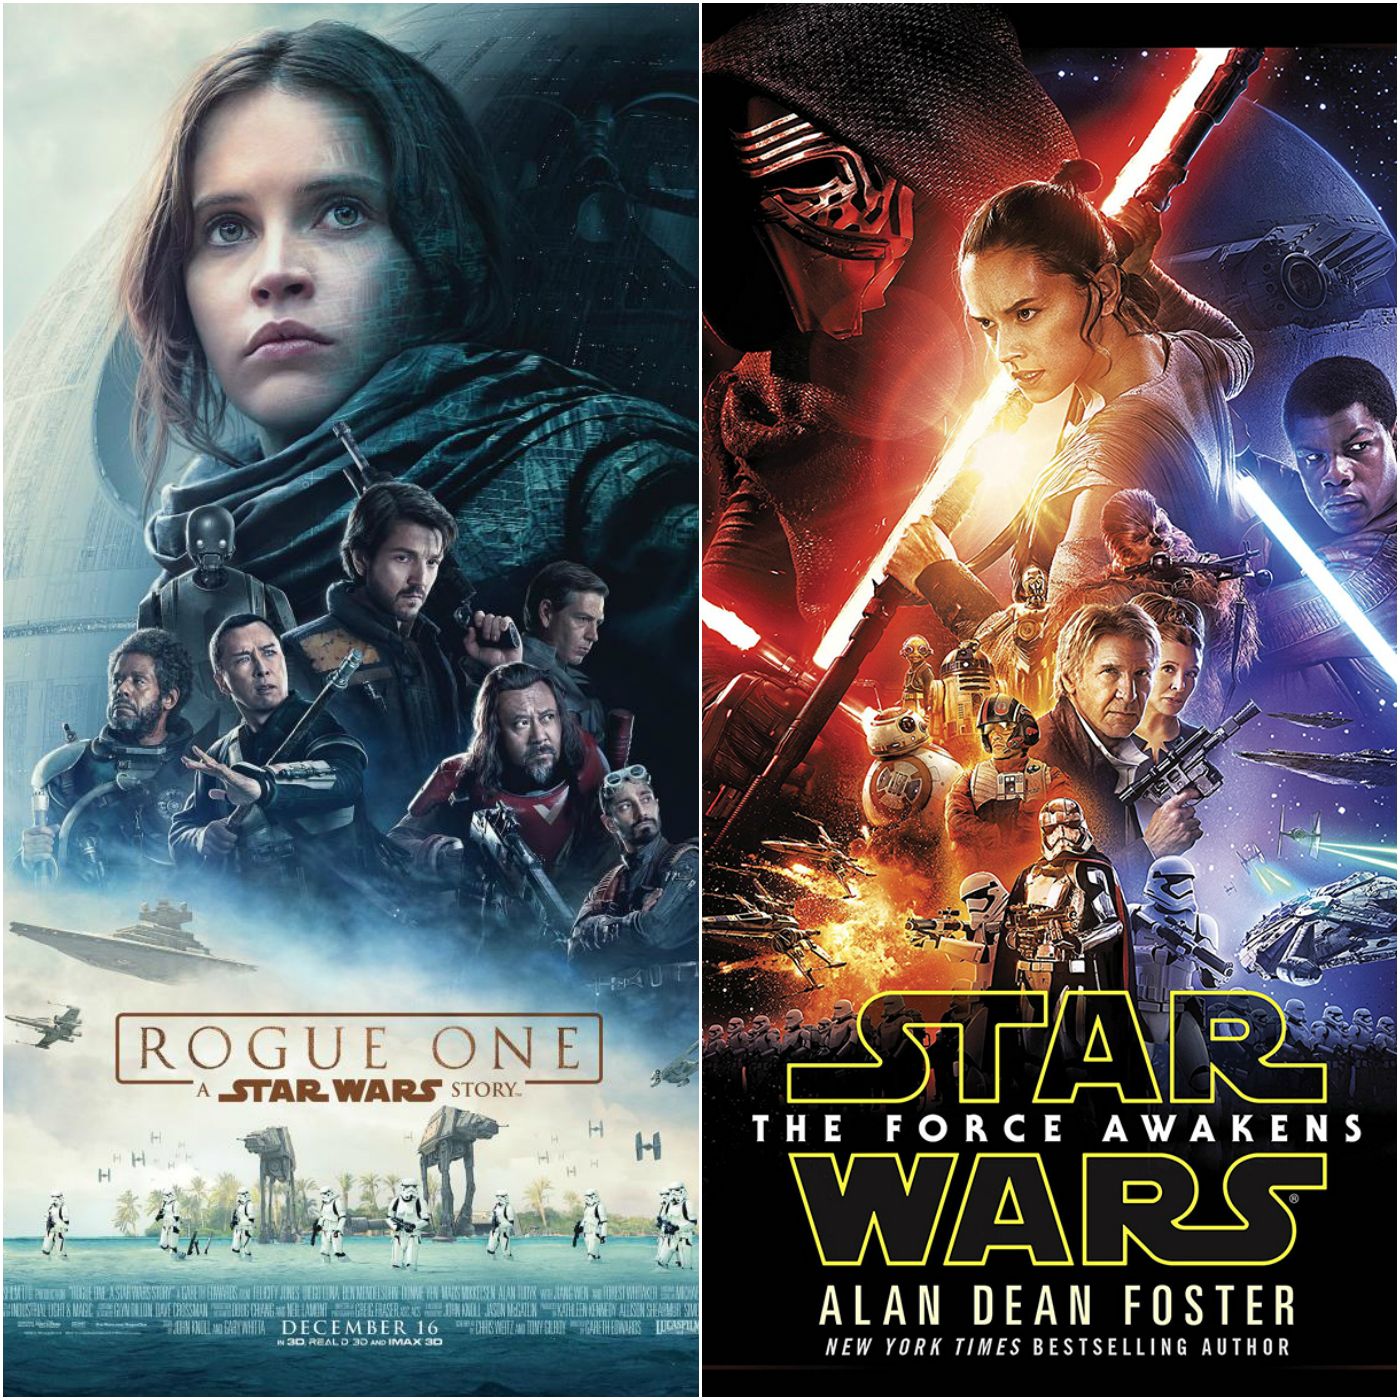 deadpool vs star wars the force awakens movie